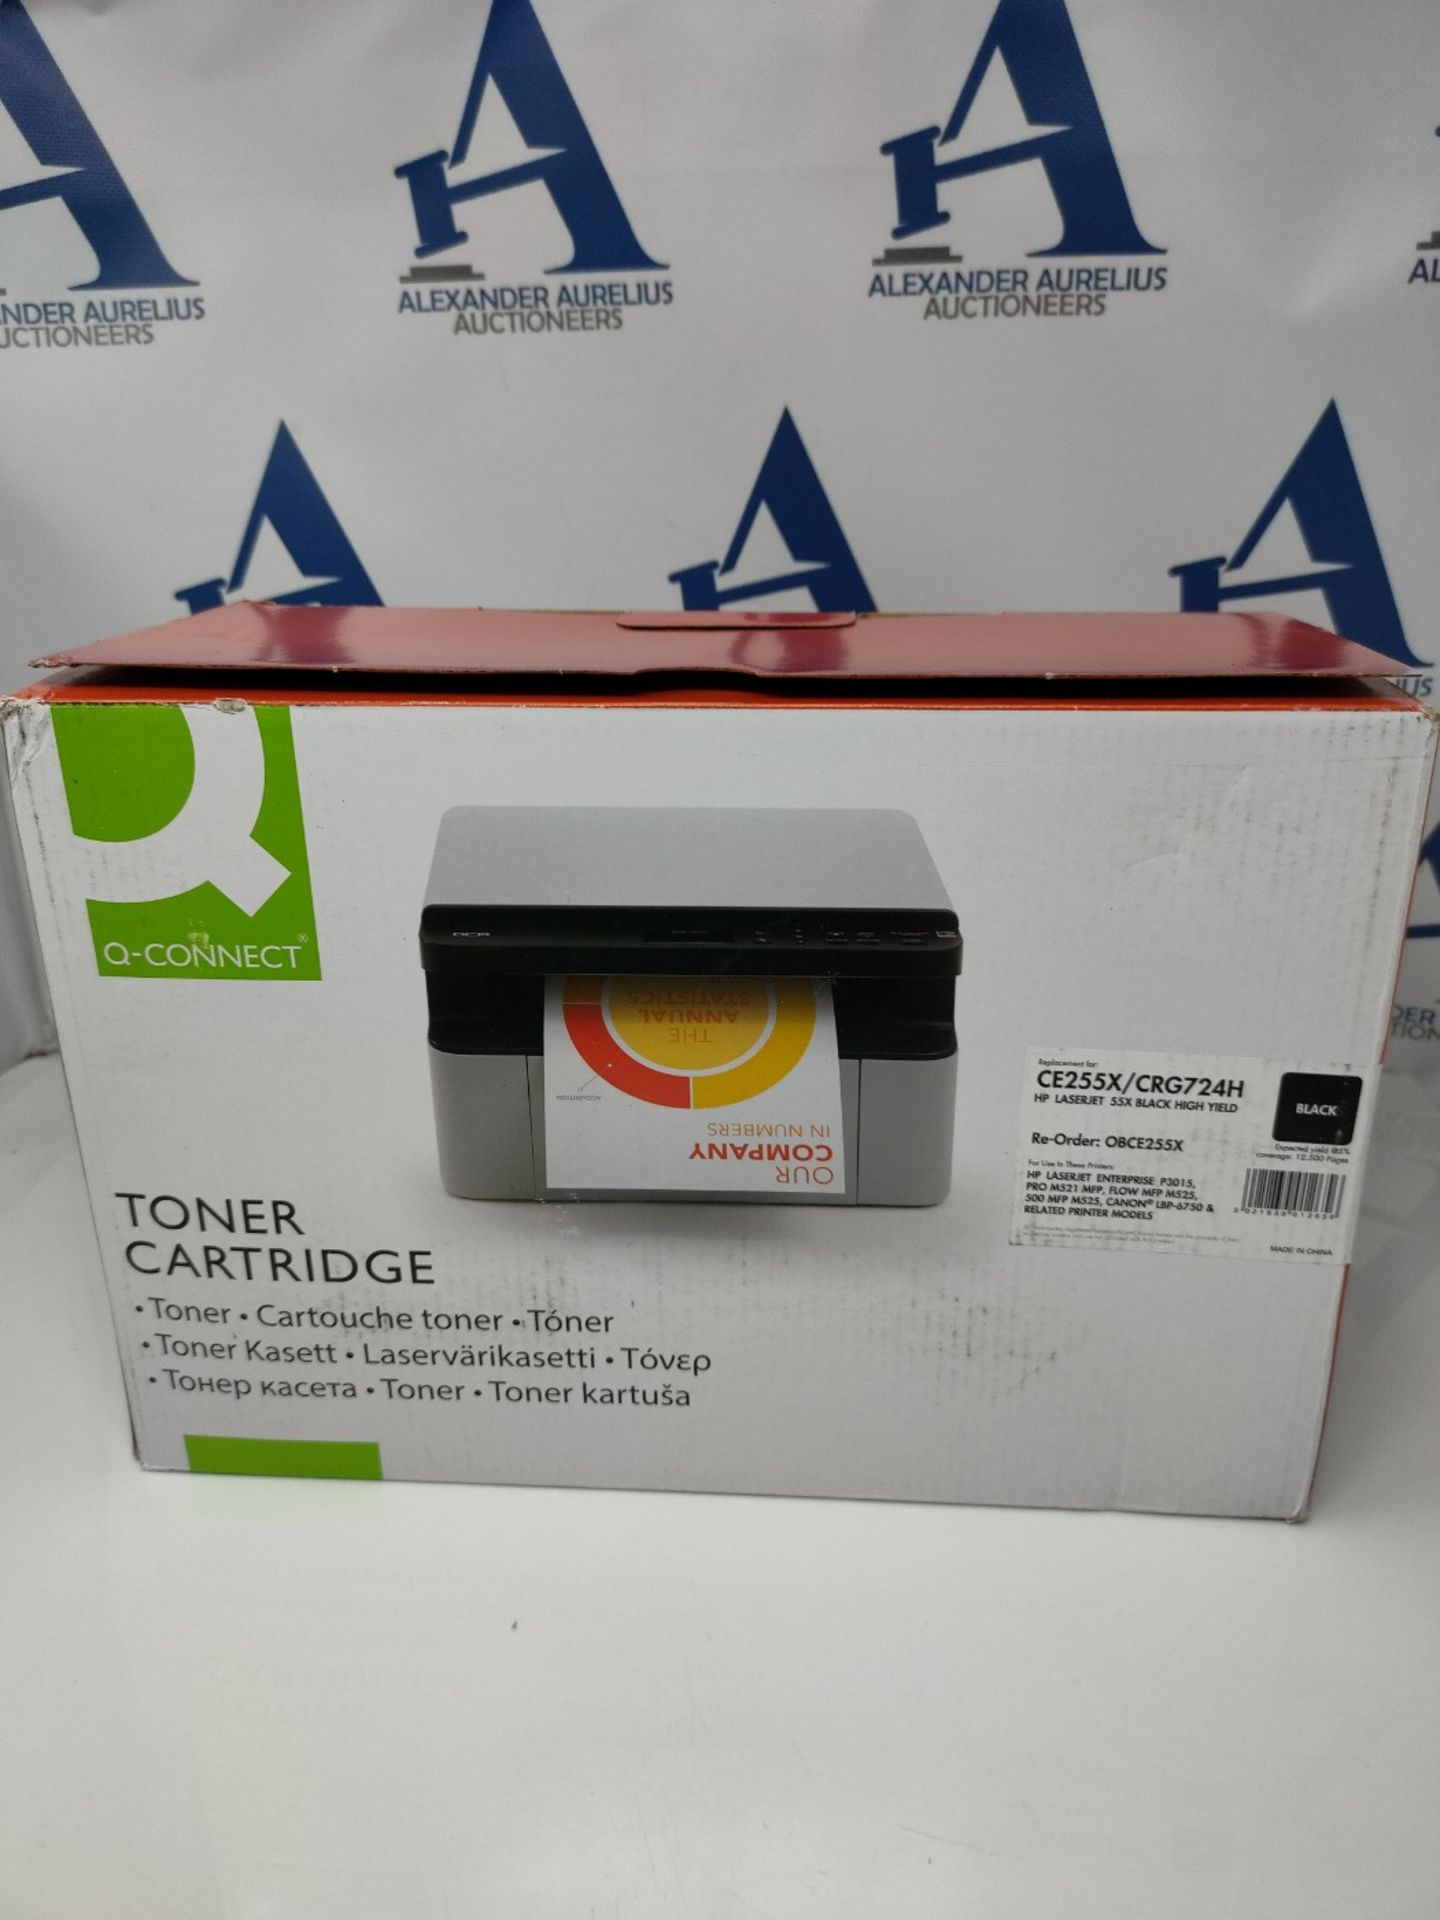 Q-Connect Compatible Toner for HP CE255X Toner Cartridge, Black - Image 2 of 3